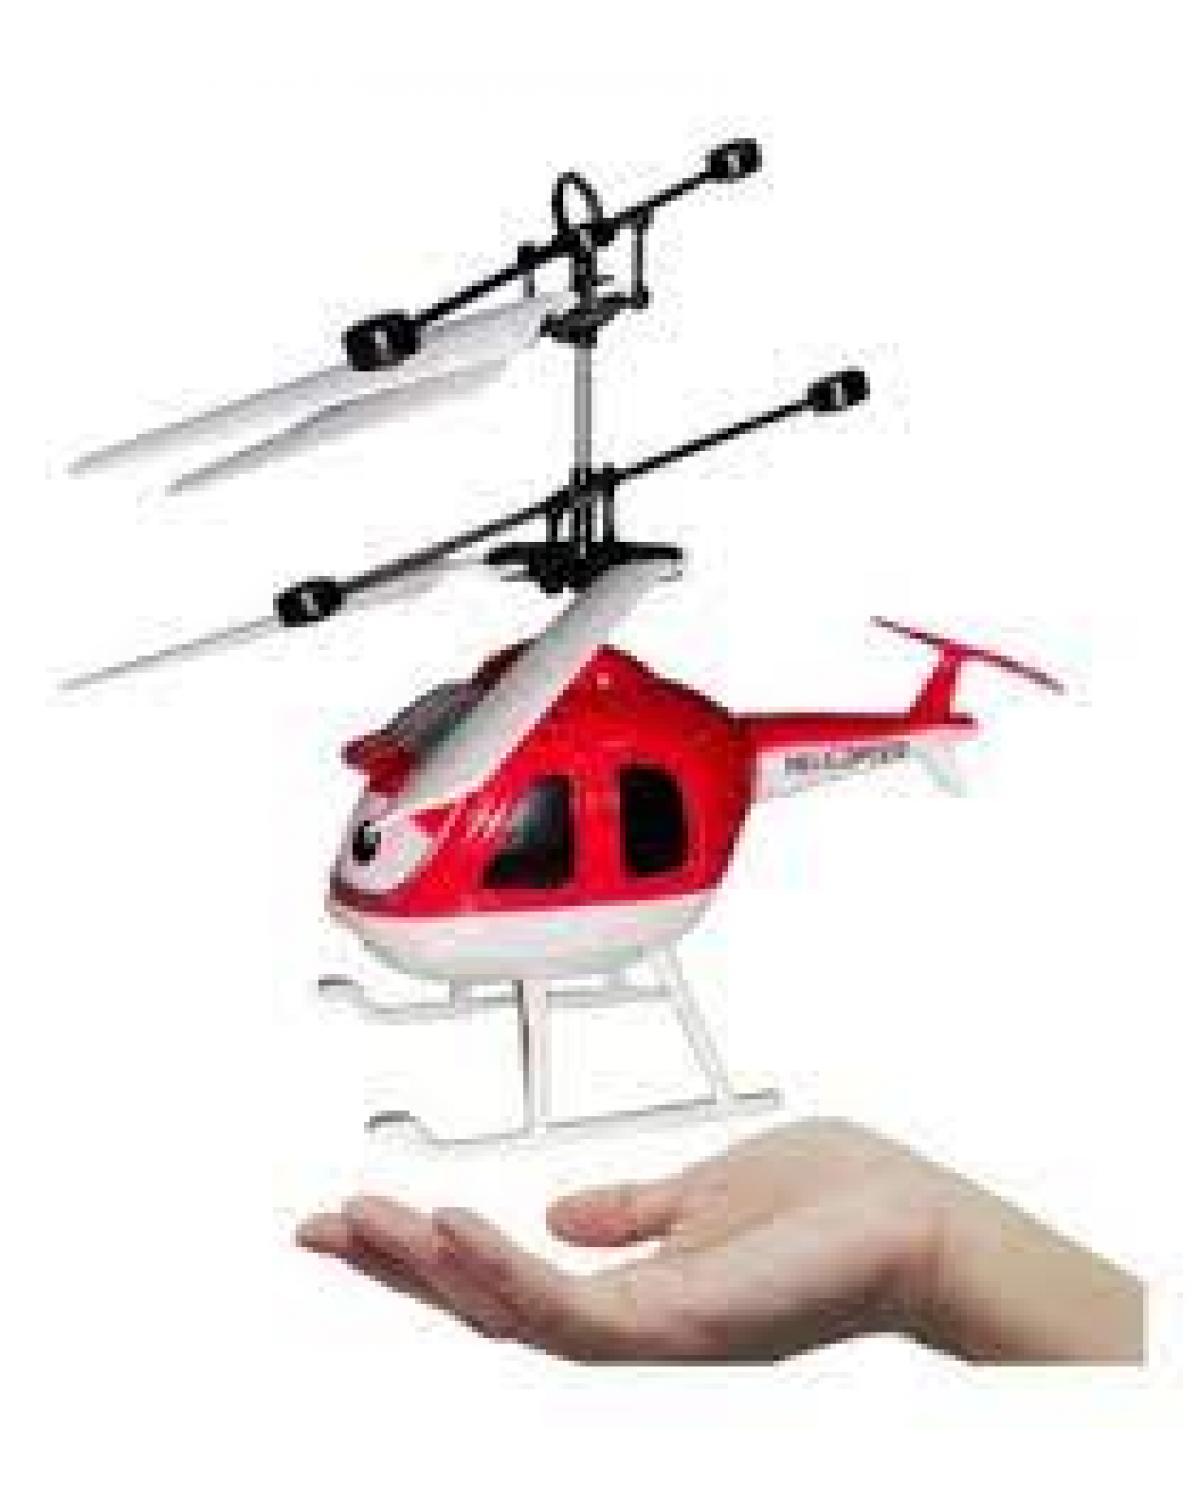 Helicóptero Mini Planador com Sensor PD302